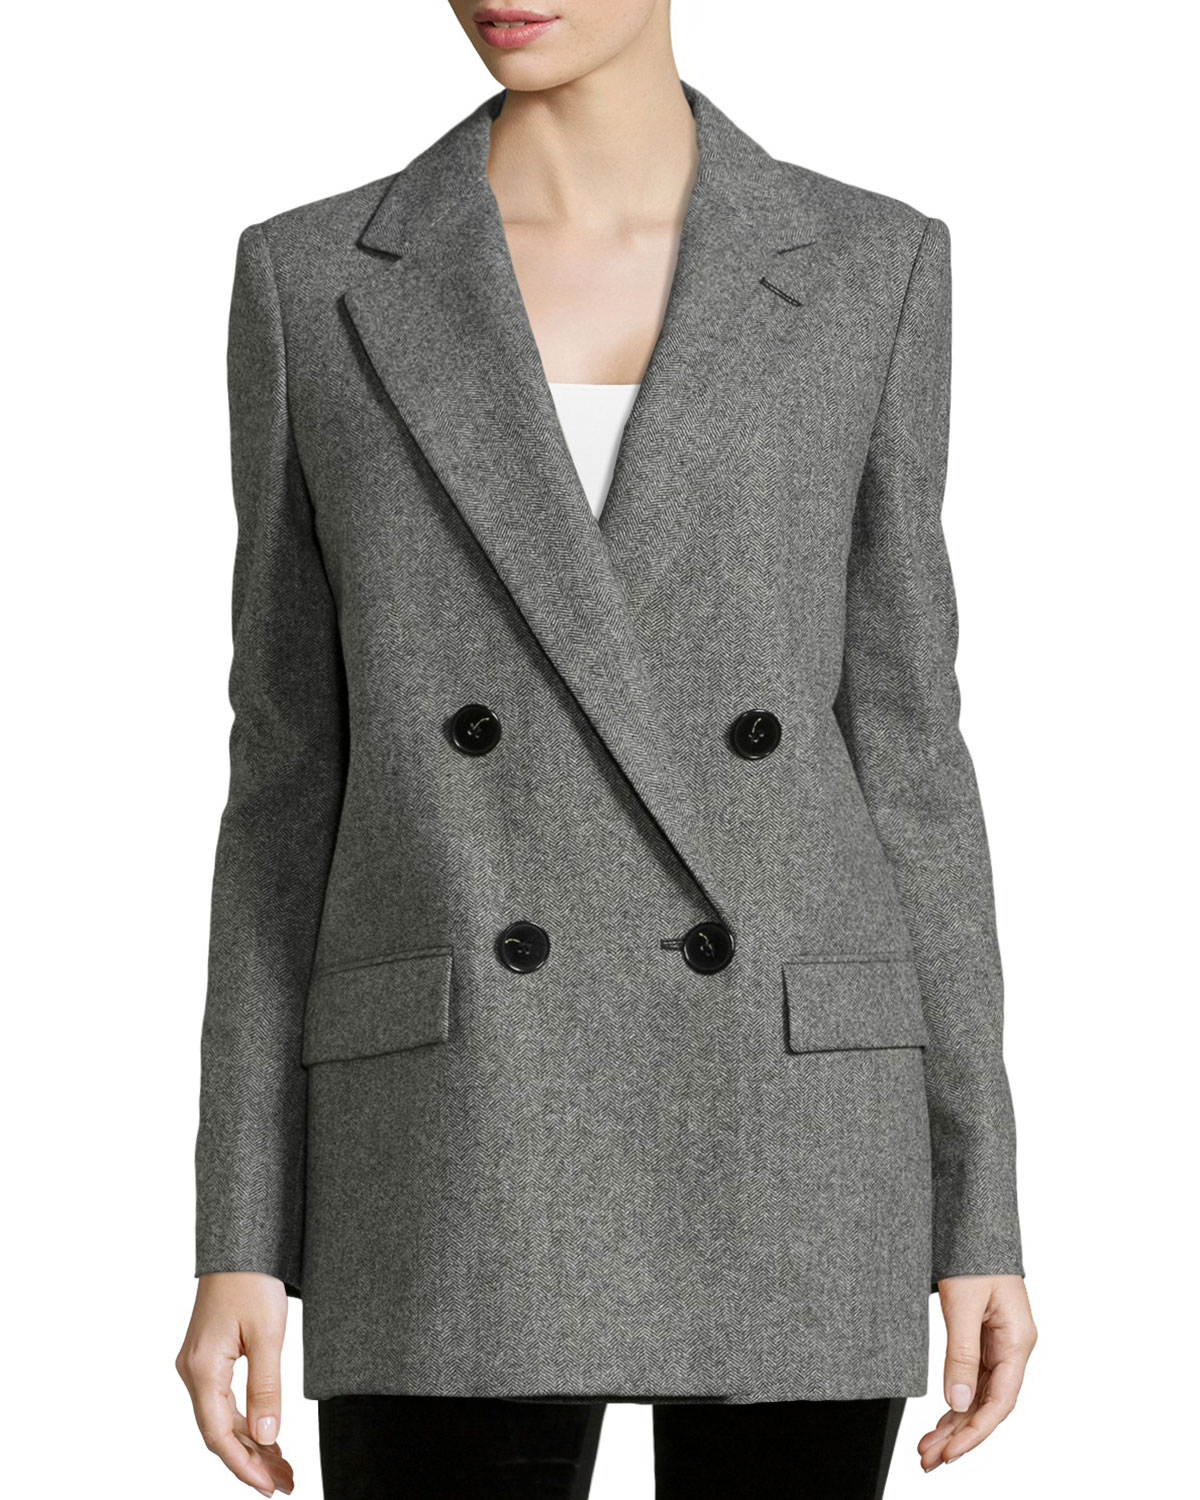 Stella mccartney Herringbone Wool Double-Breasted Coat in Gray | Lyst